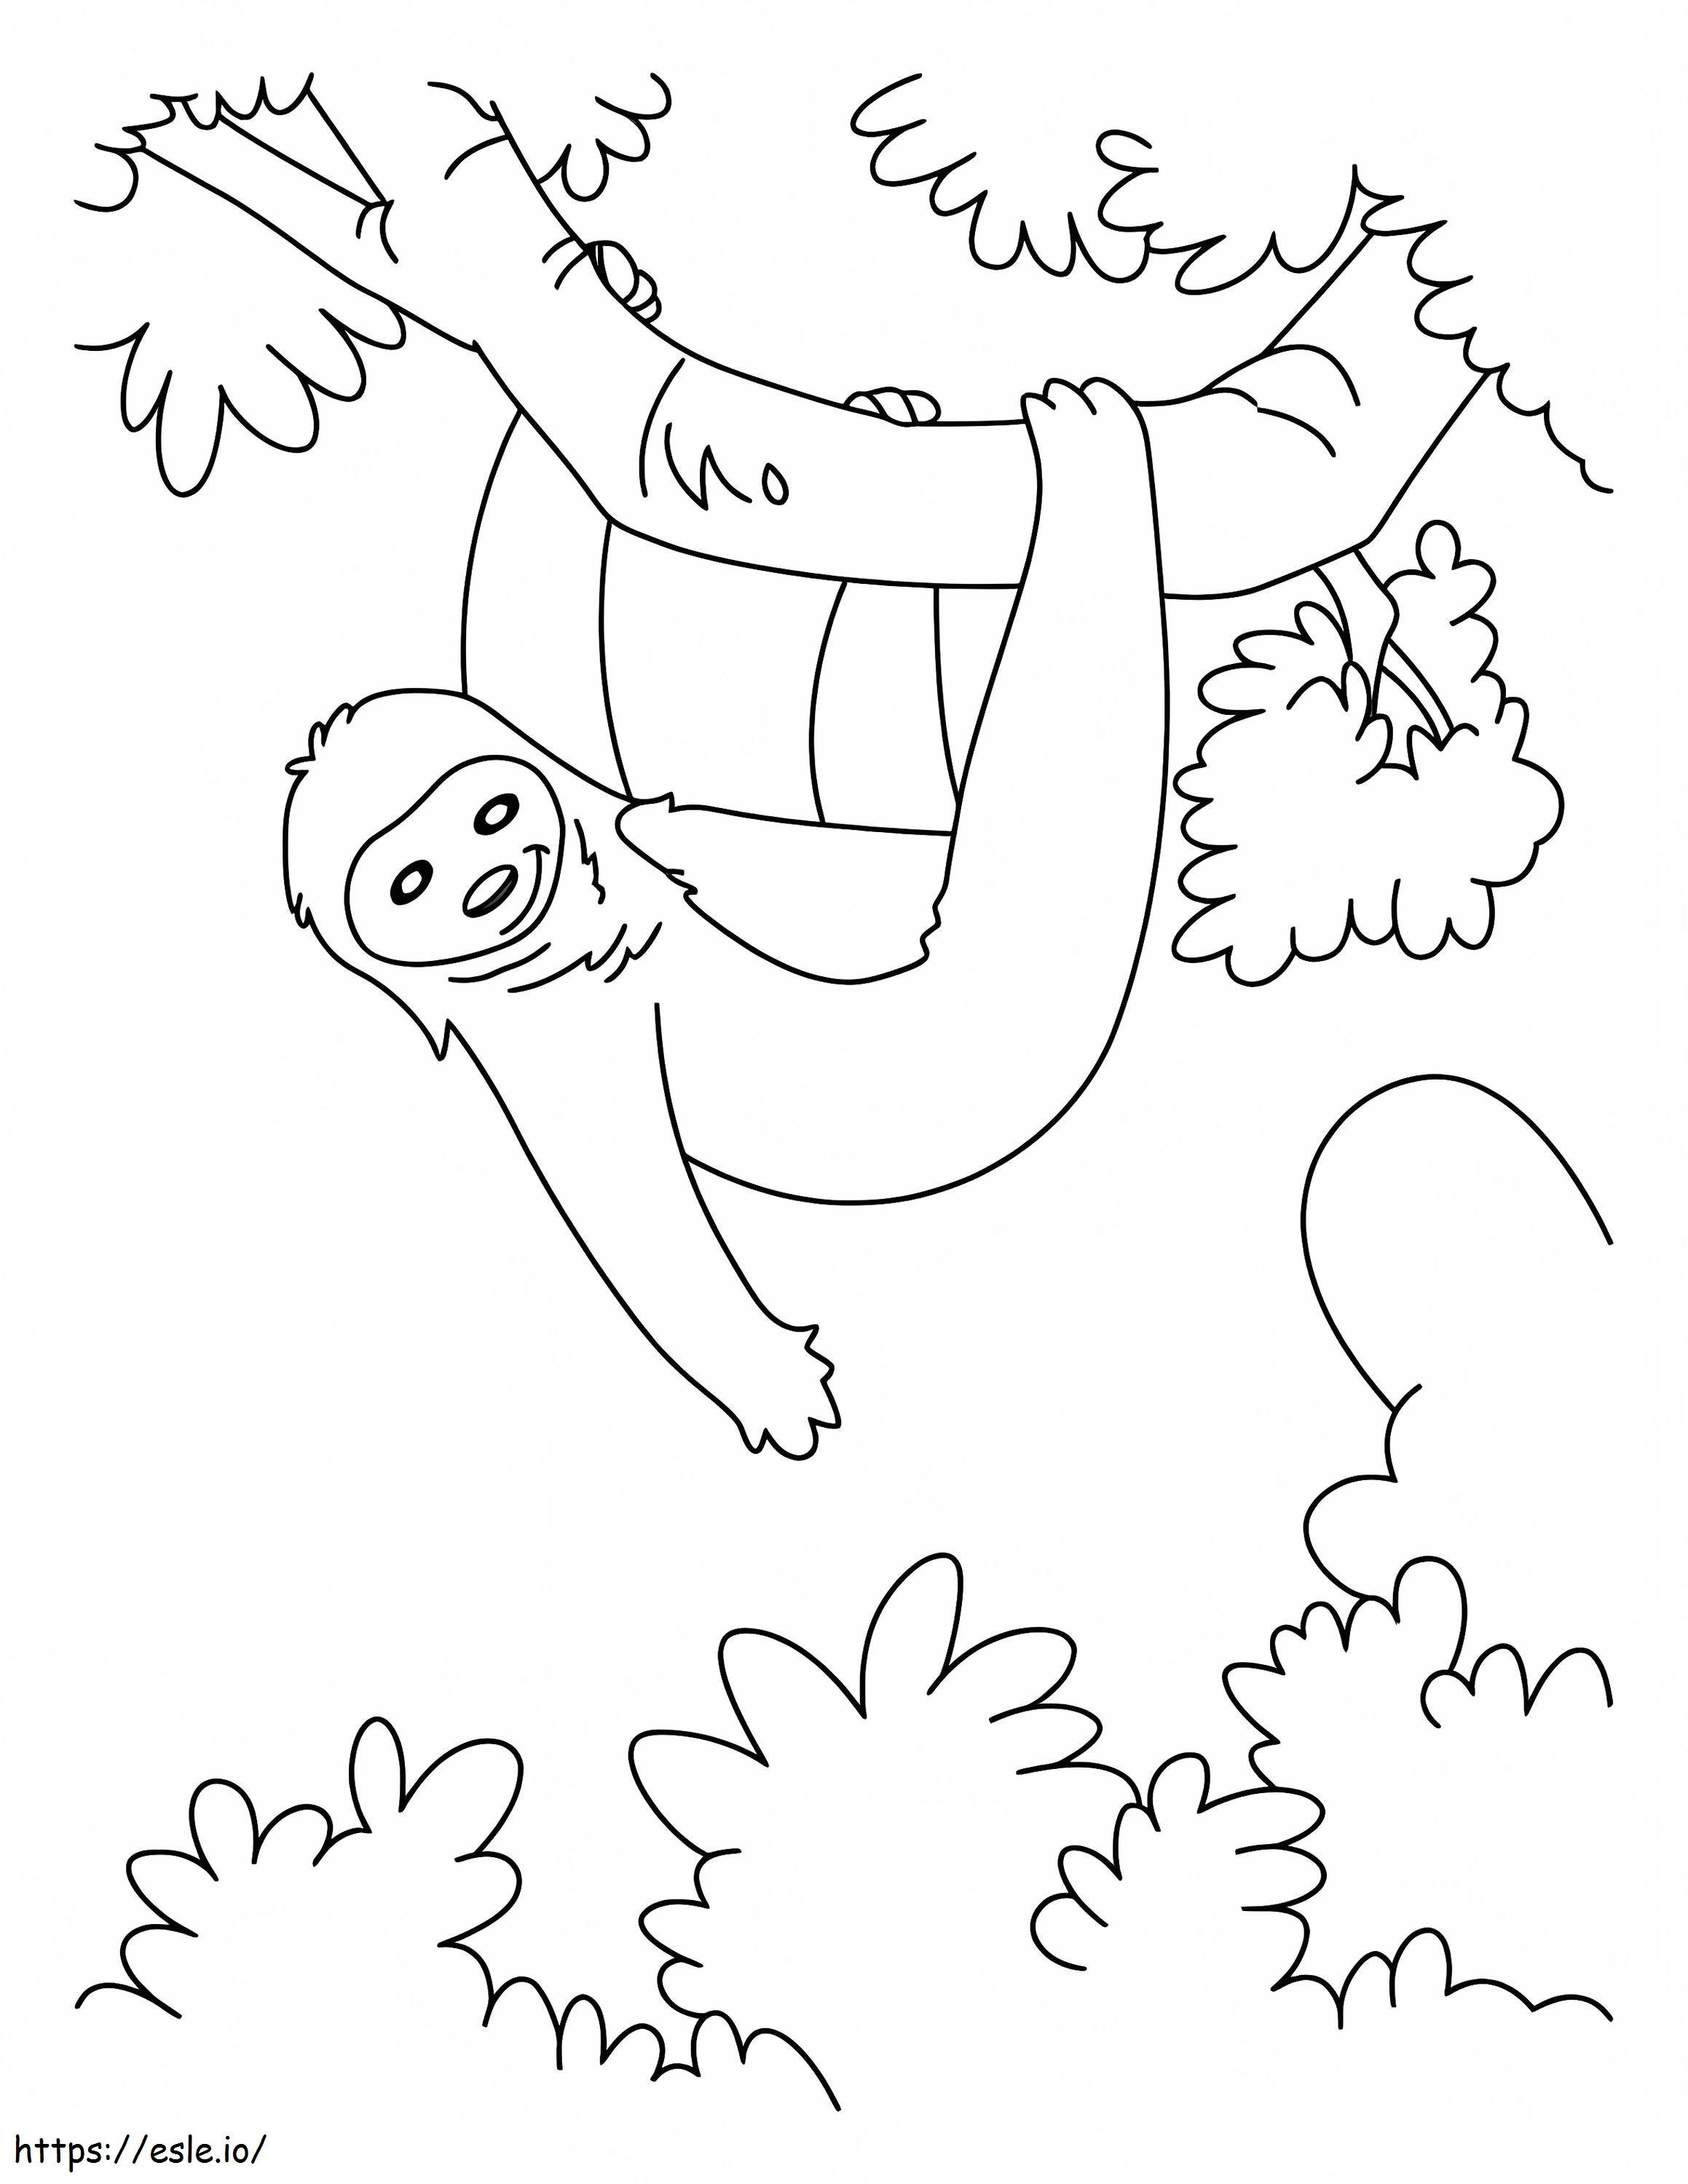 Wild Sloth coloring page